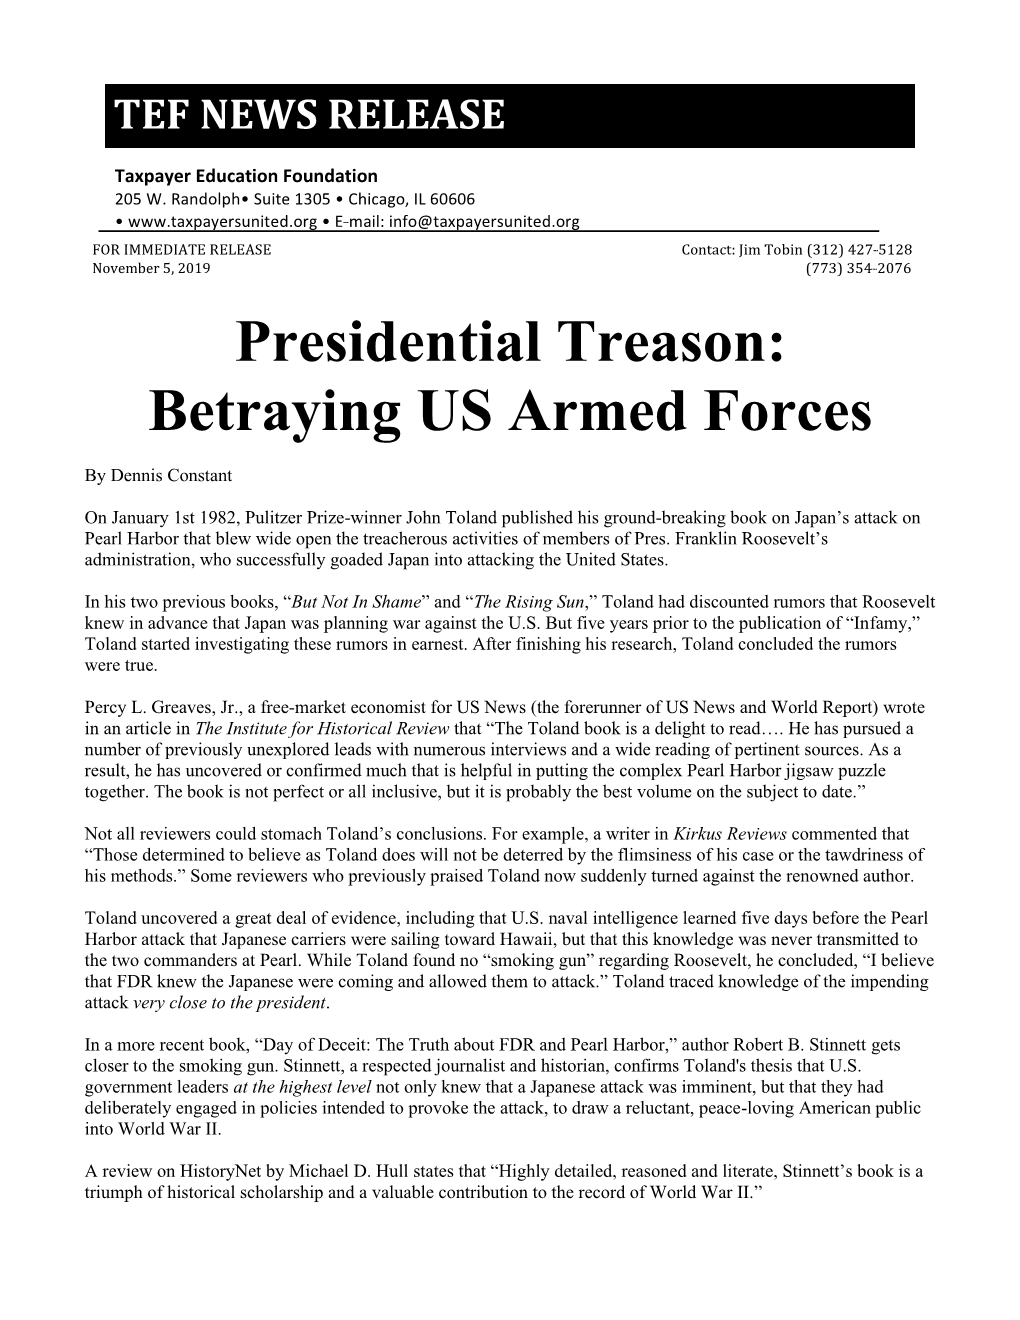 Presidential Treason